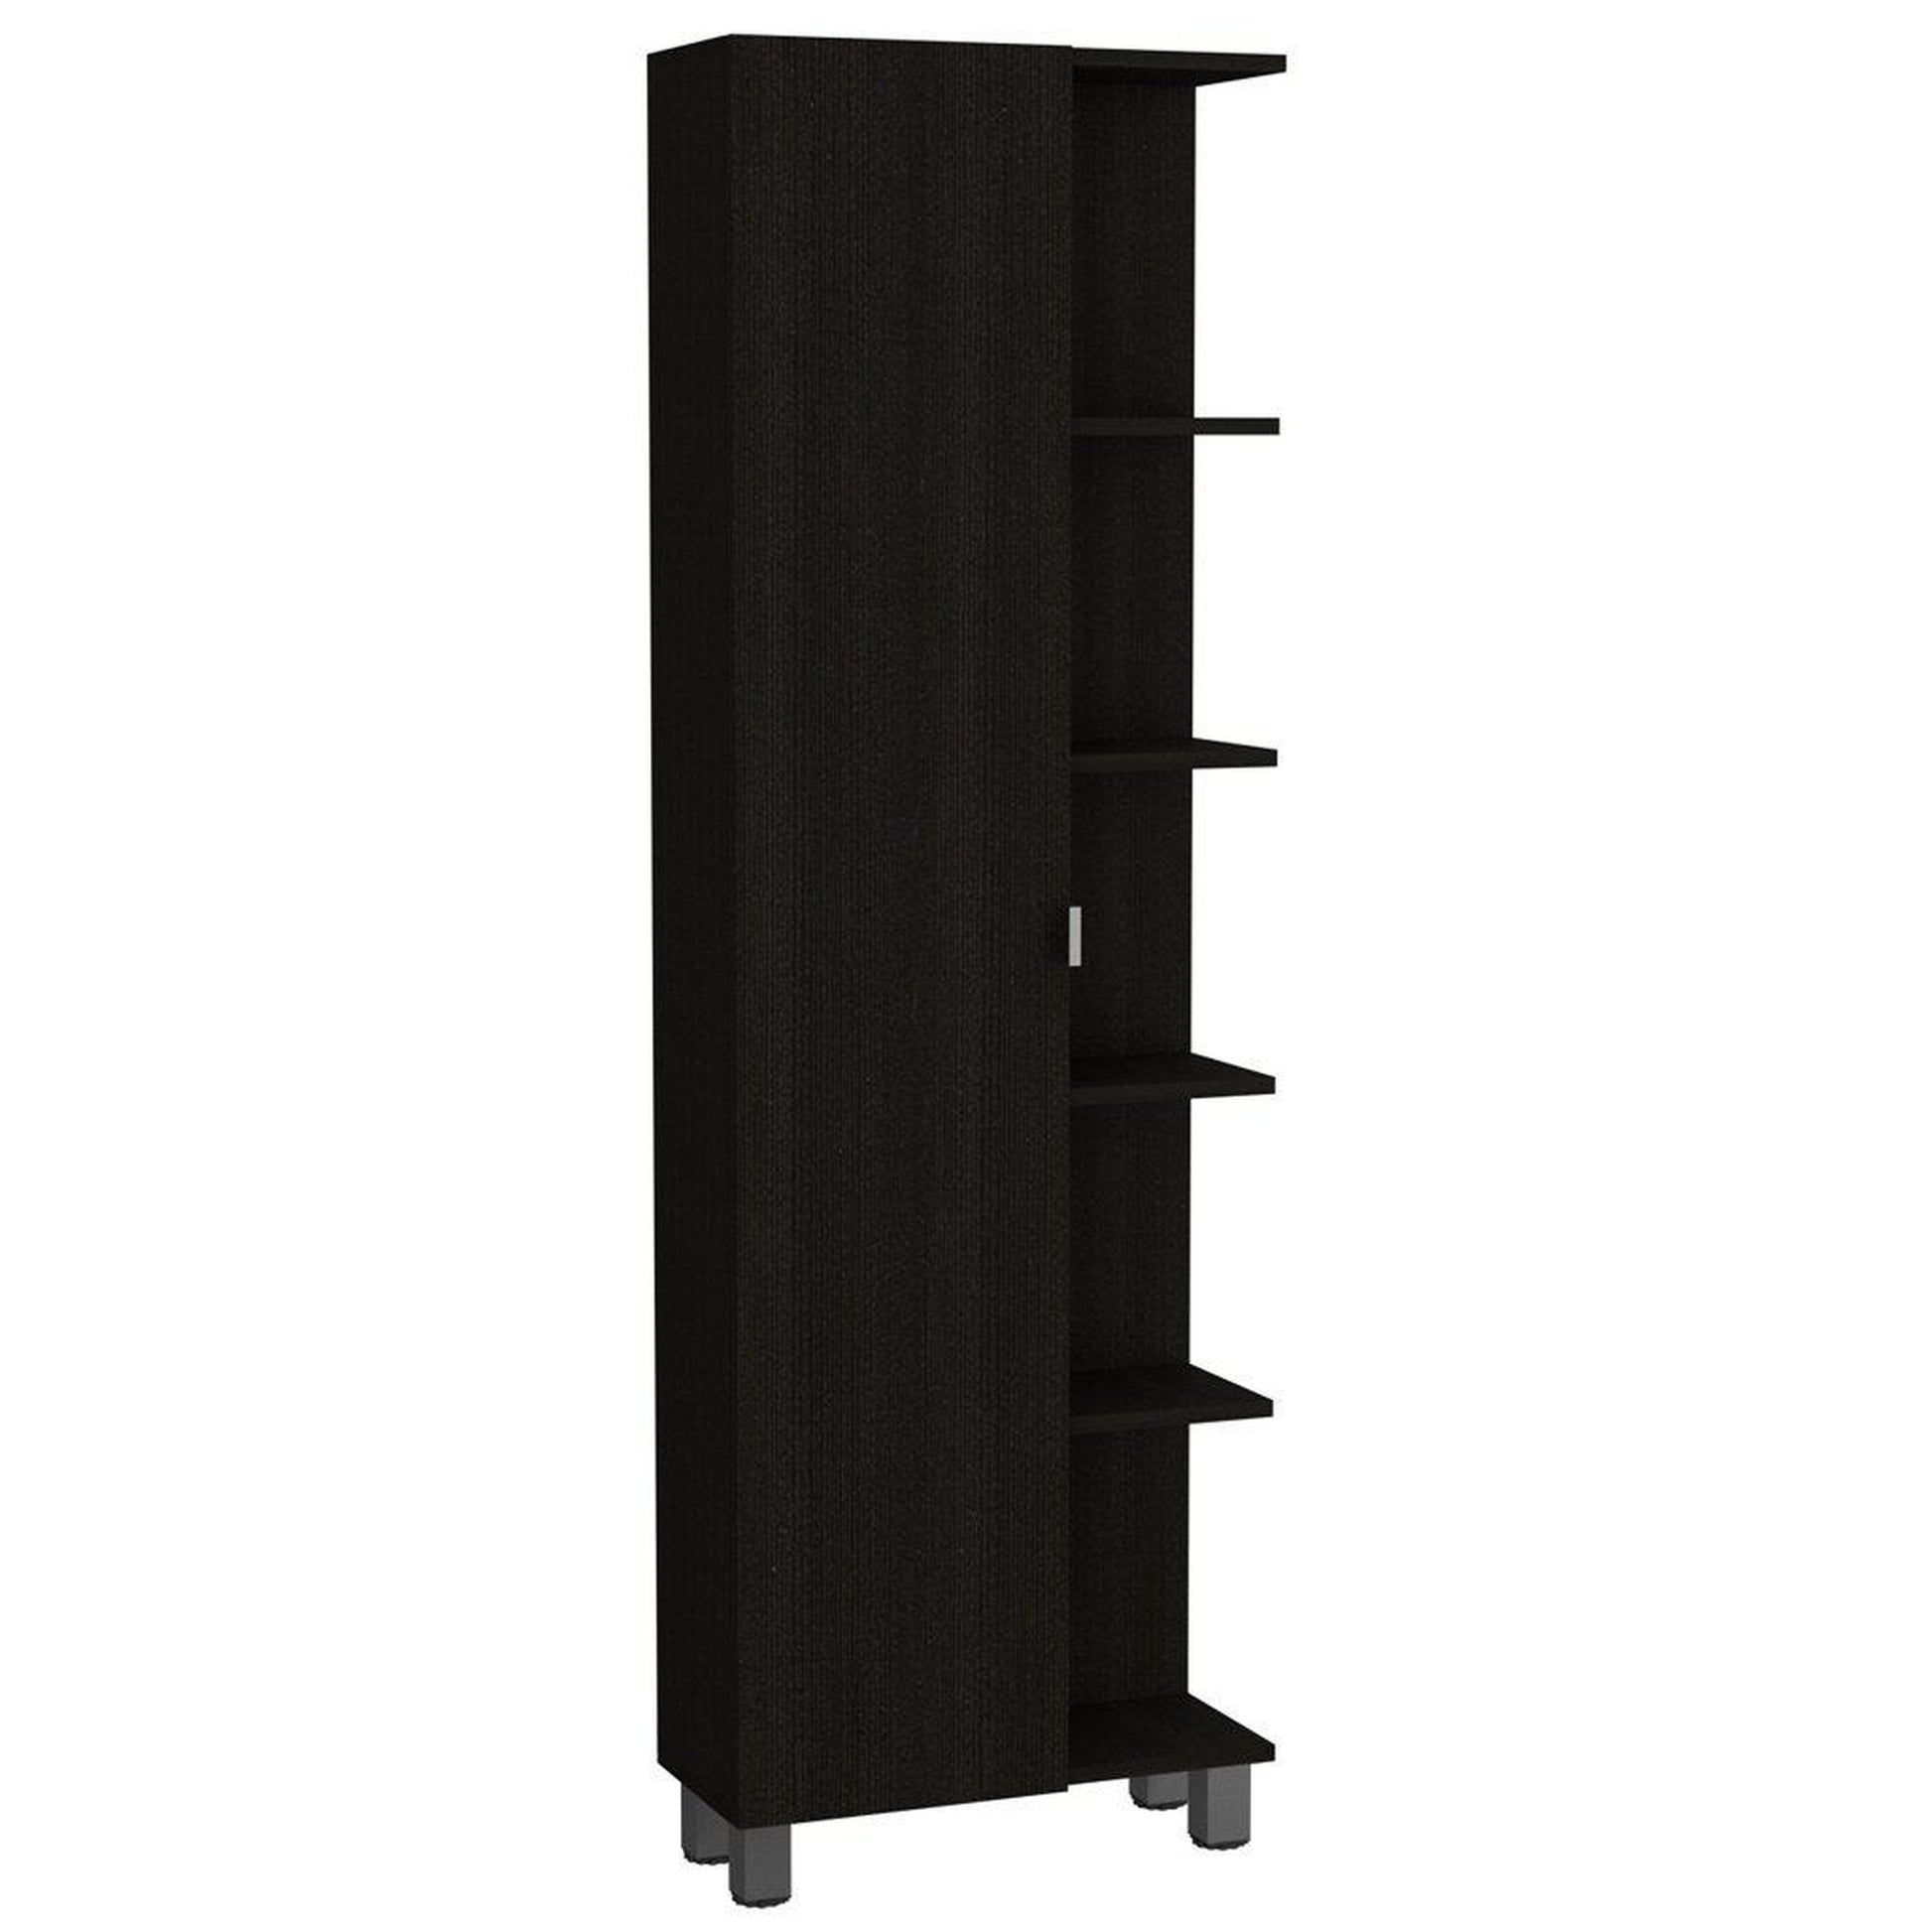 Bella Supreme Wardrobe Storage - 7 Foot Closet with Sliding Shelves